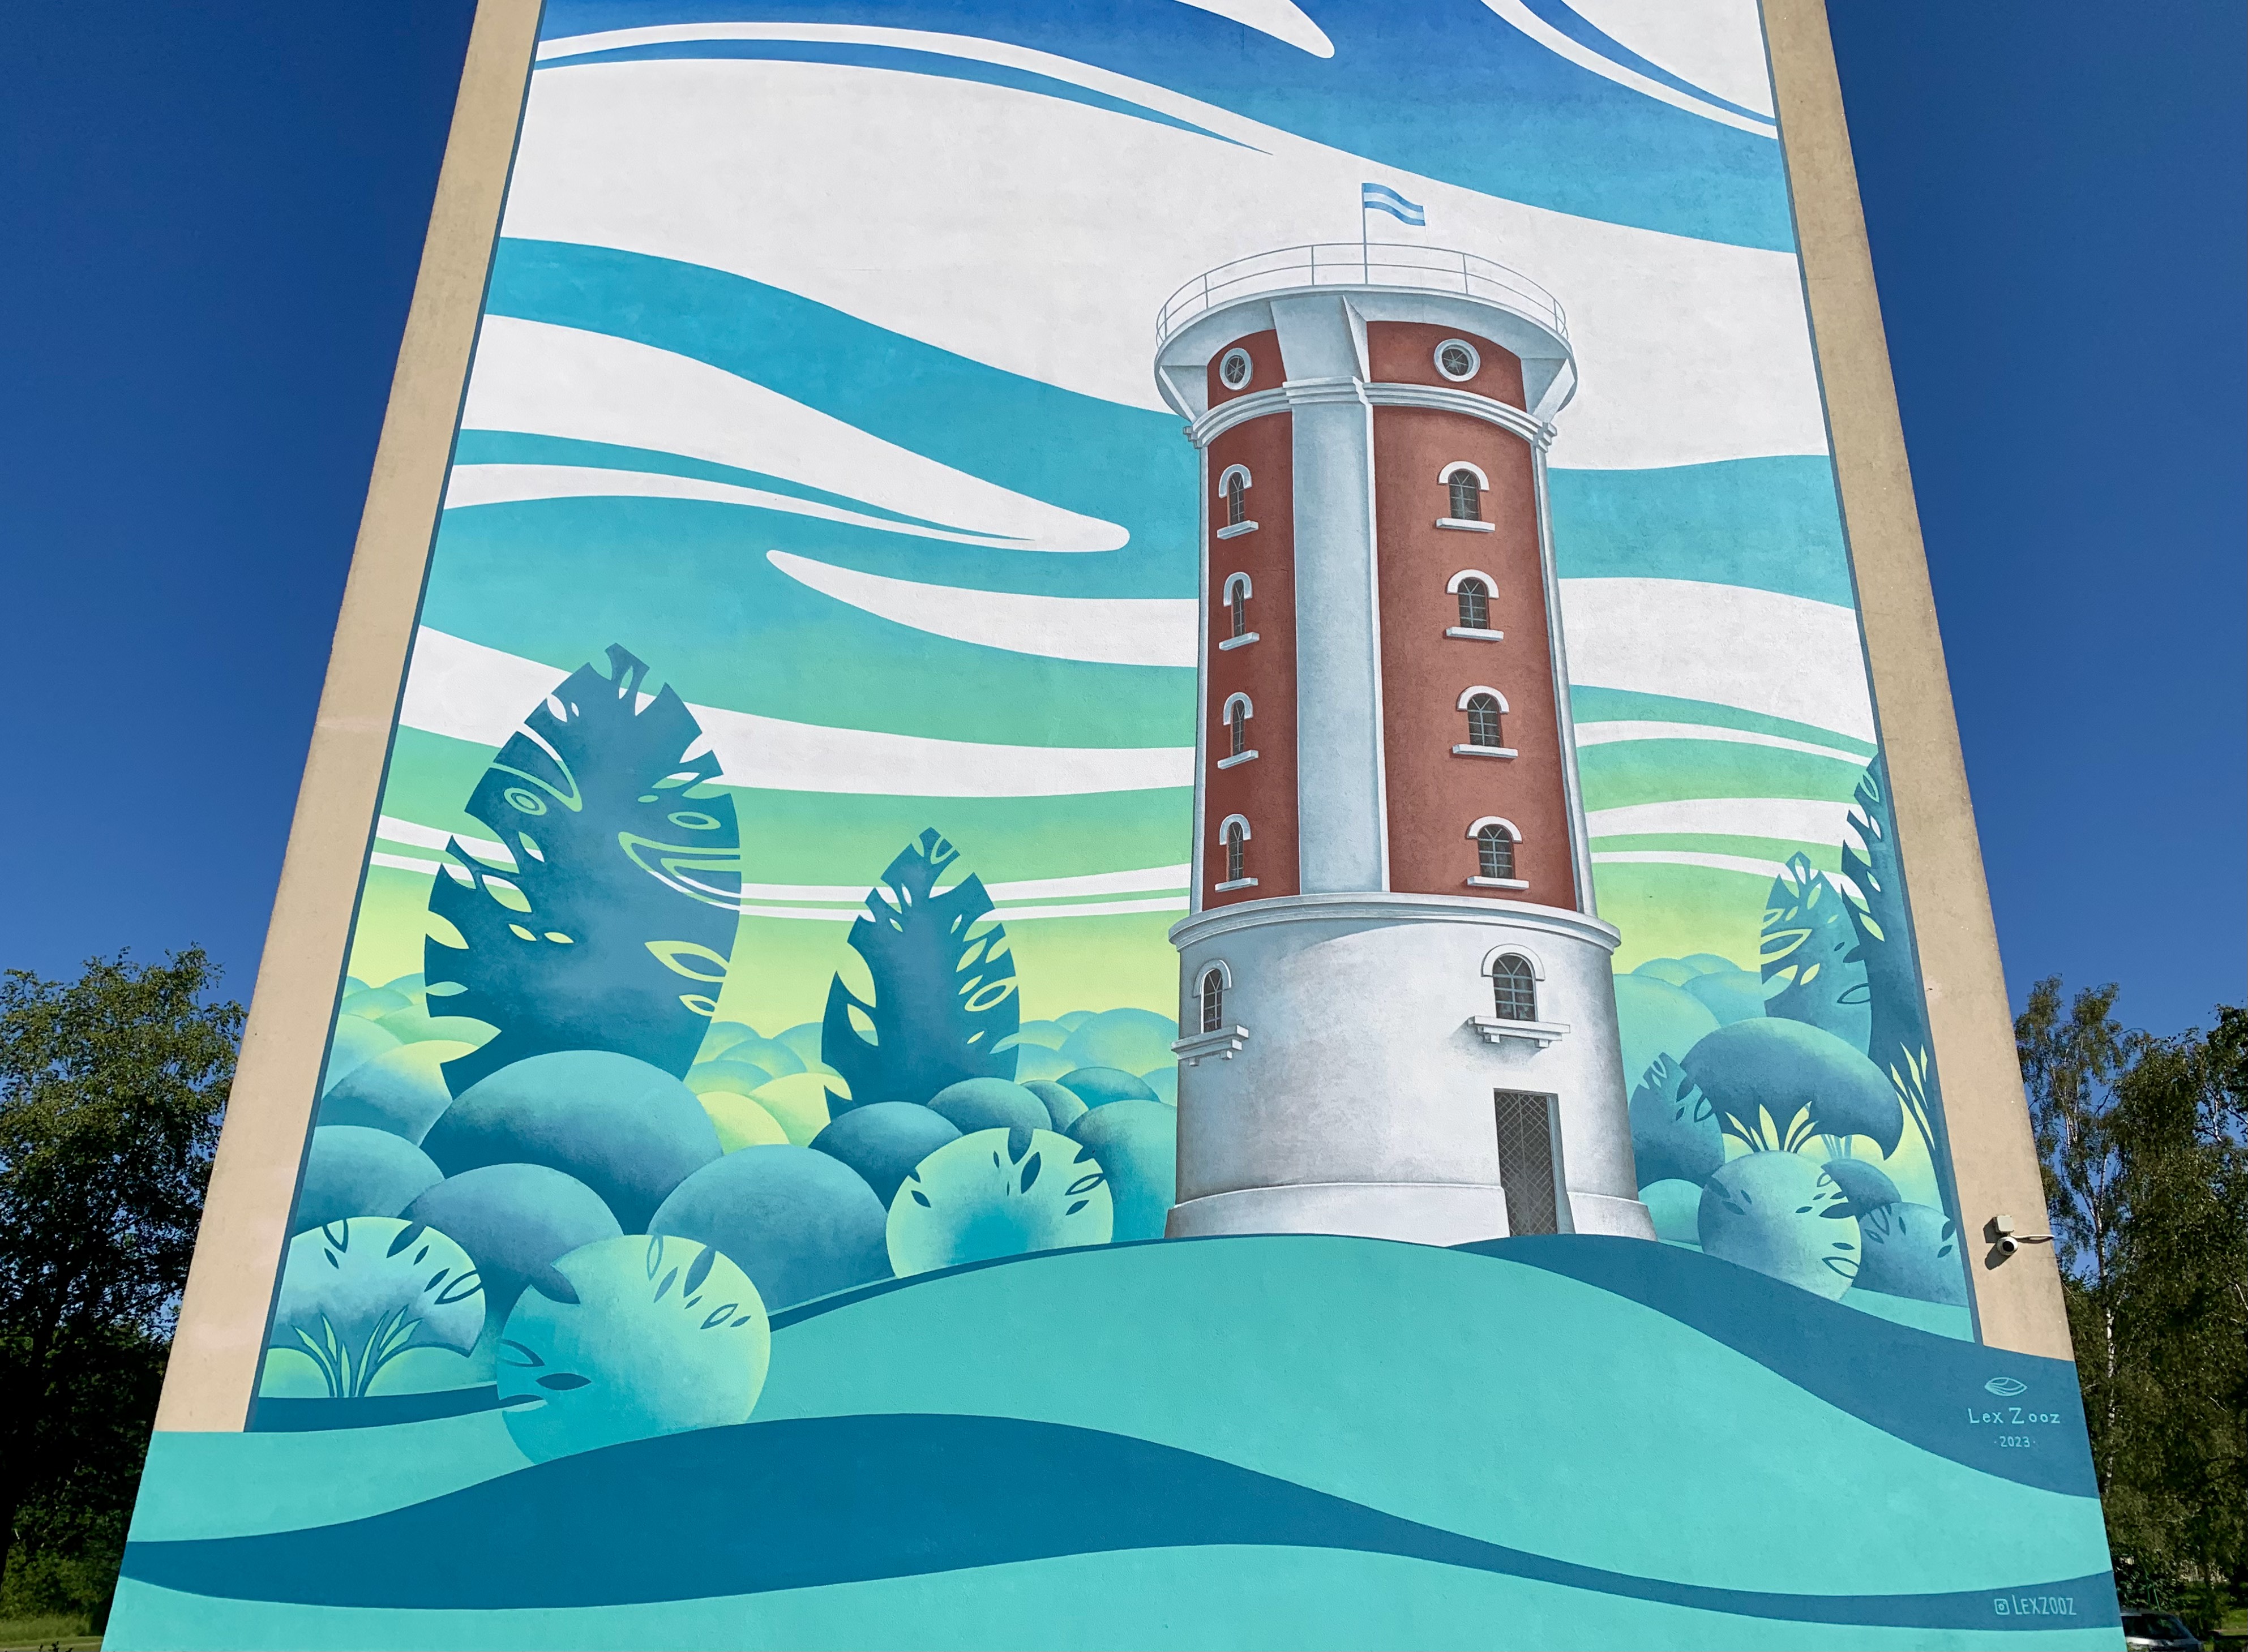 Maardu water tower by Lex Zooz - Street Art Cities